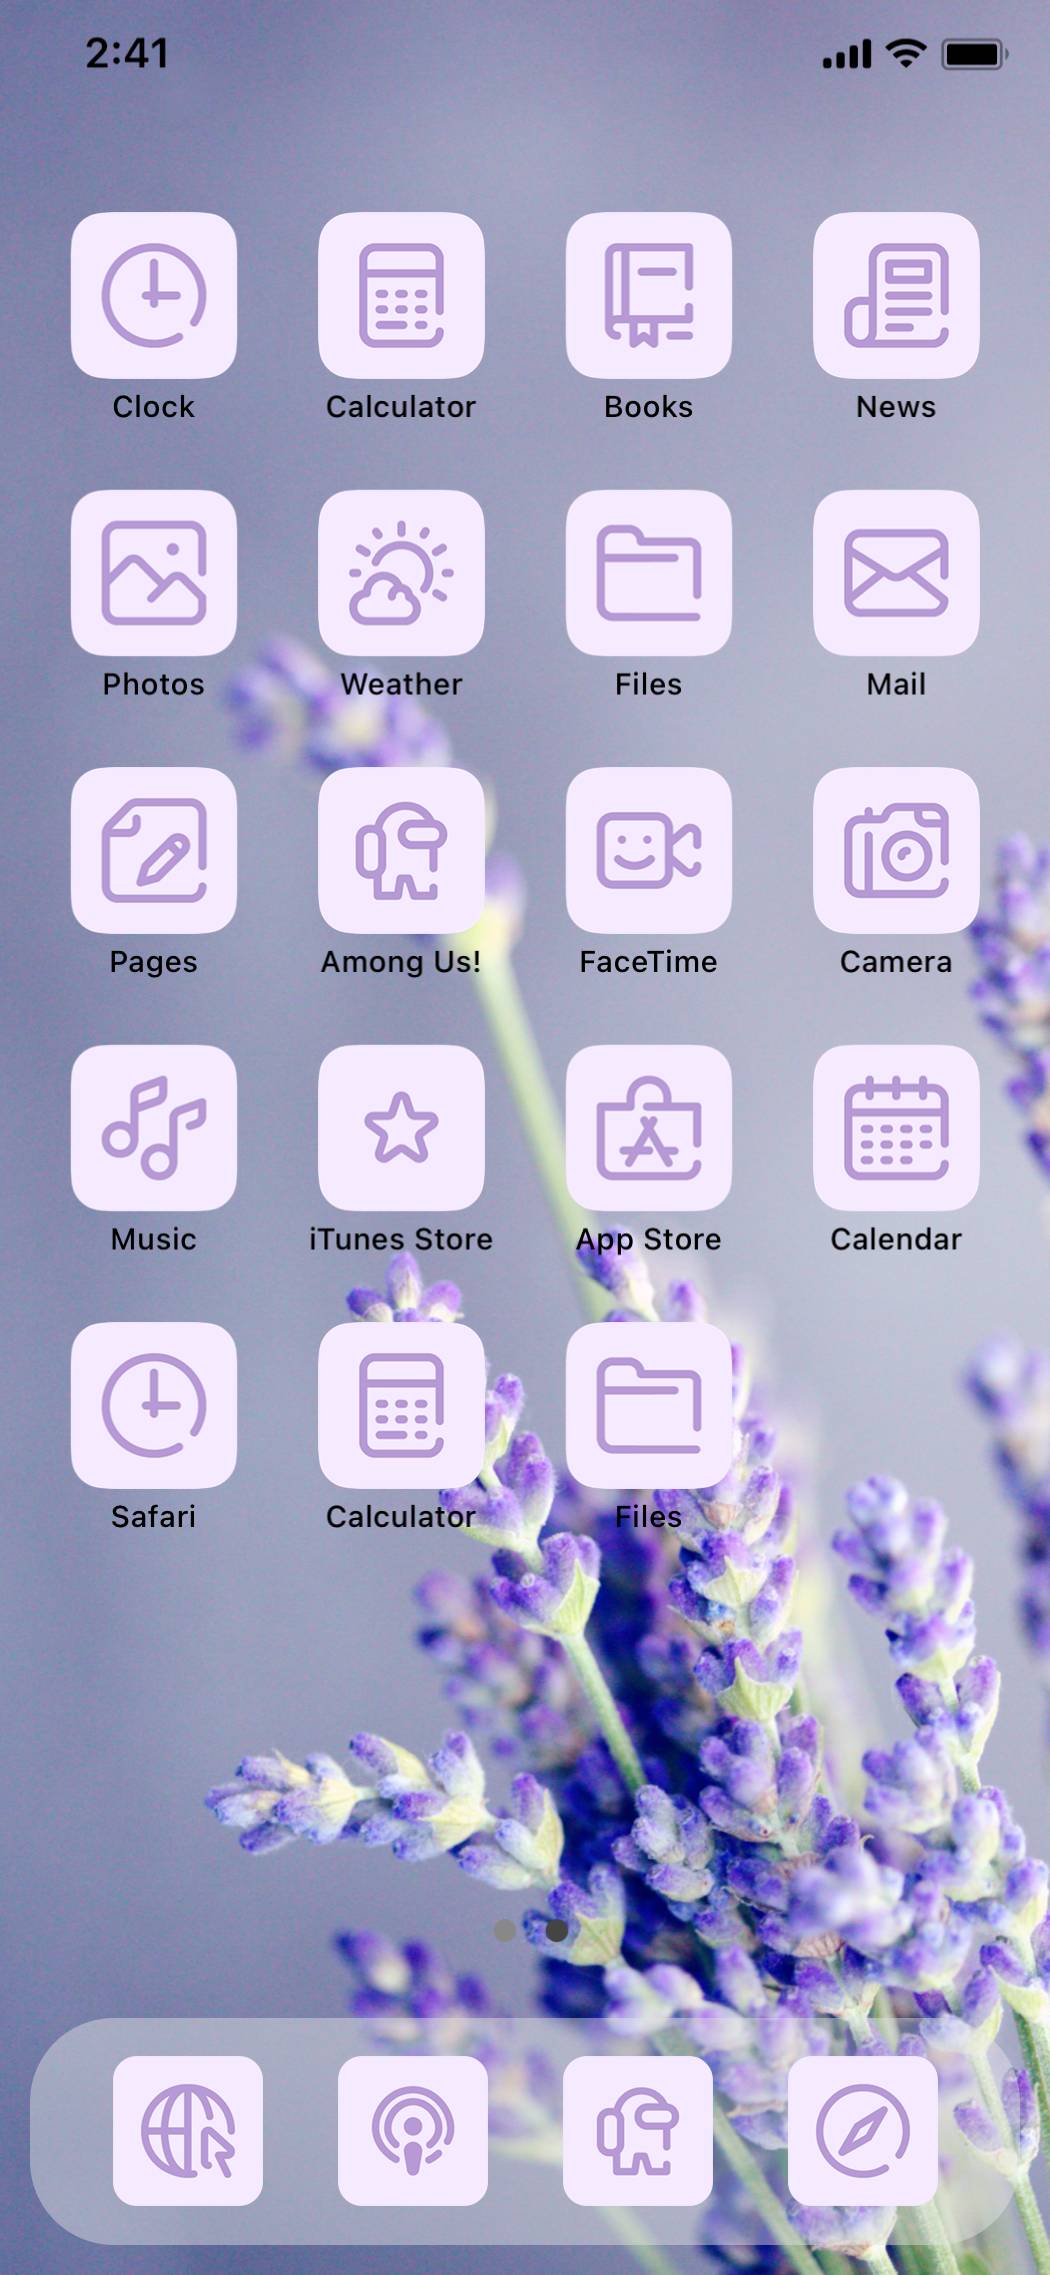 cute lavender aesthetic!!Ідеї для головного екрана[T9QpzGs0epnbD6WVcKNK]